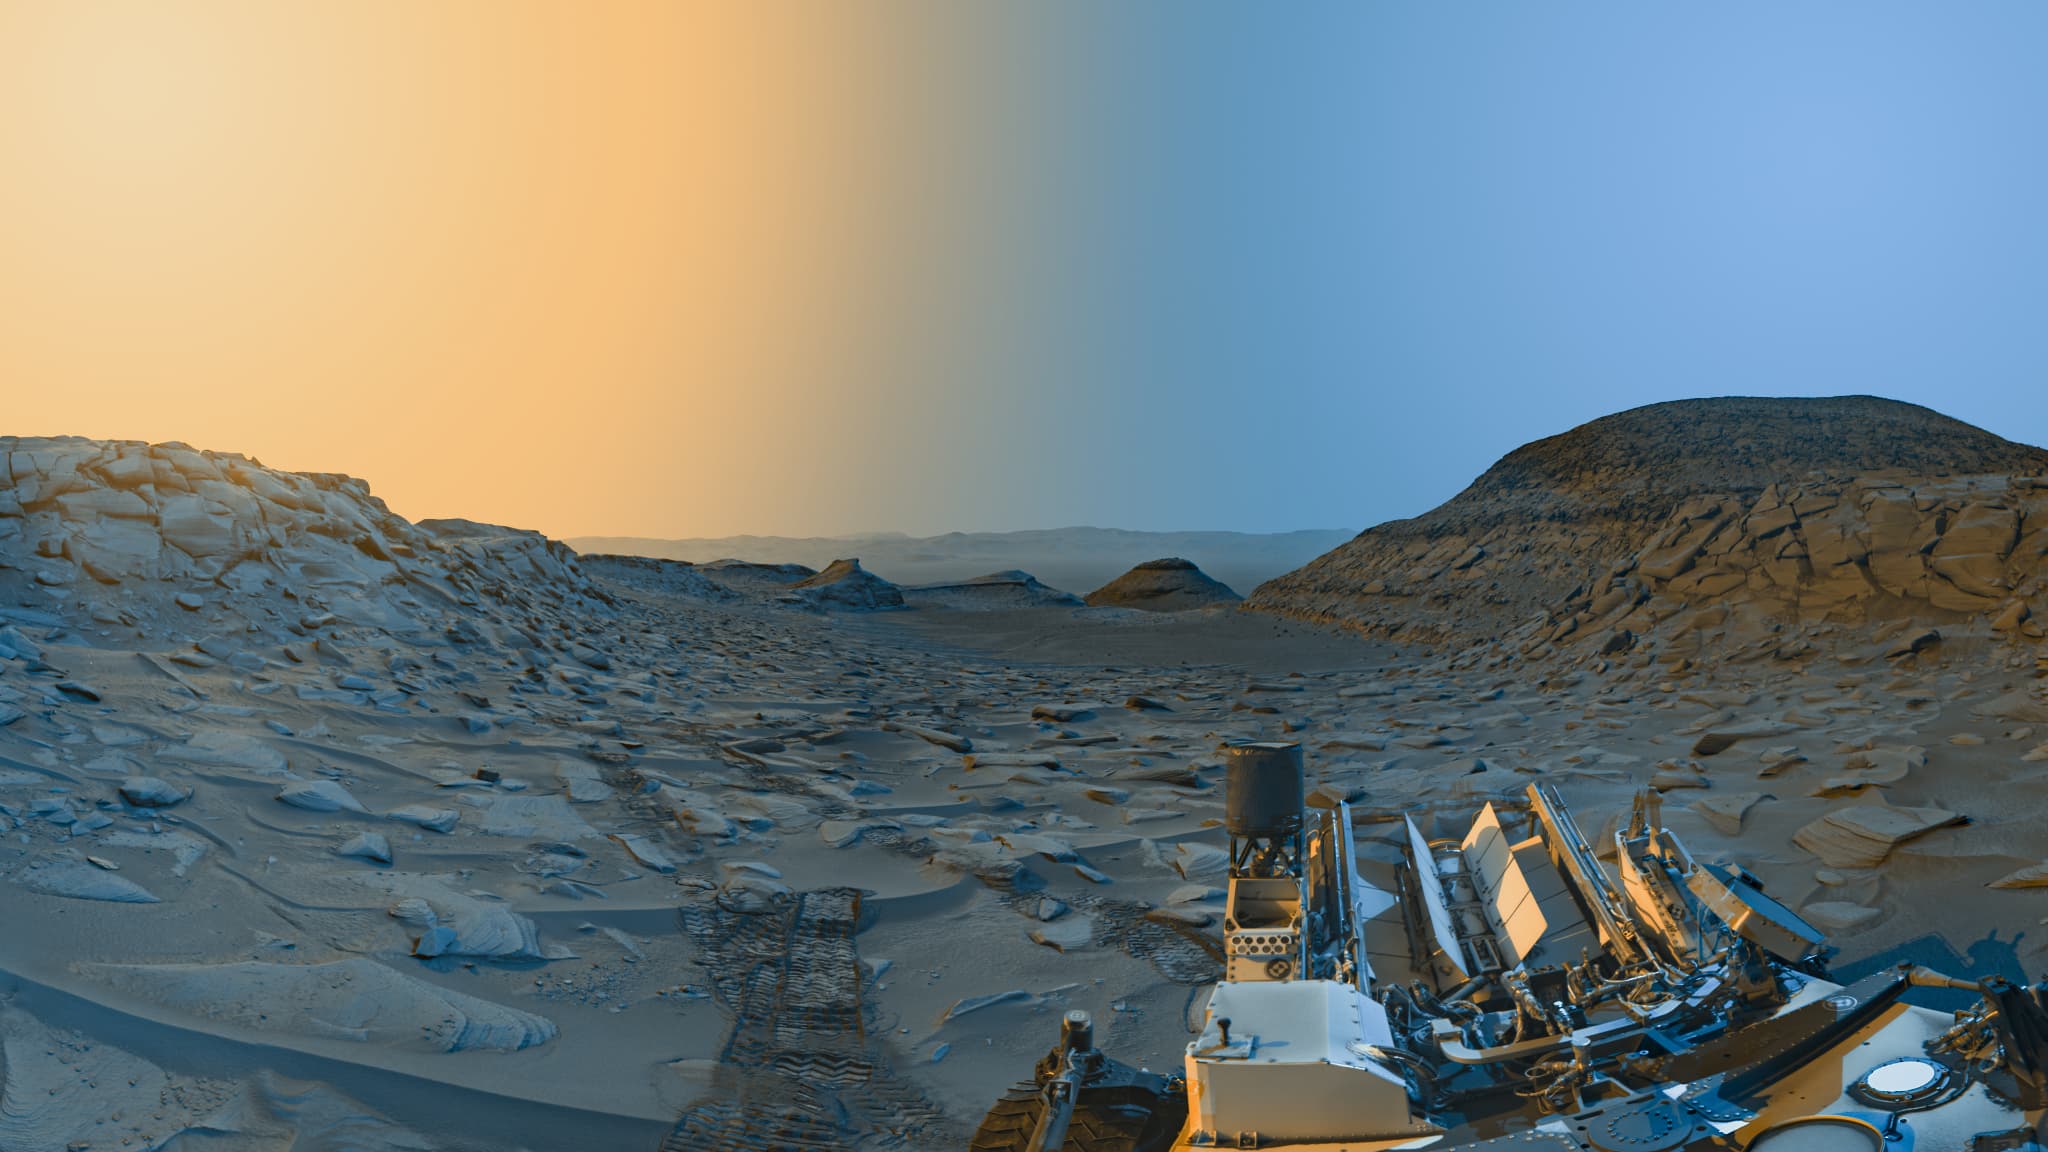 NASA reveals a wonderful image of Mars taken by Curiosity